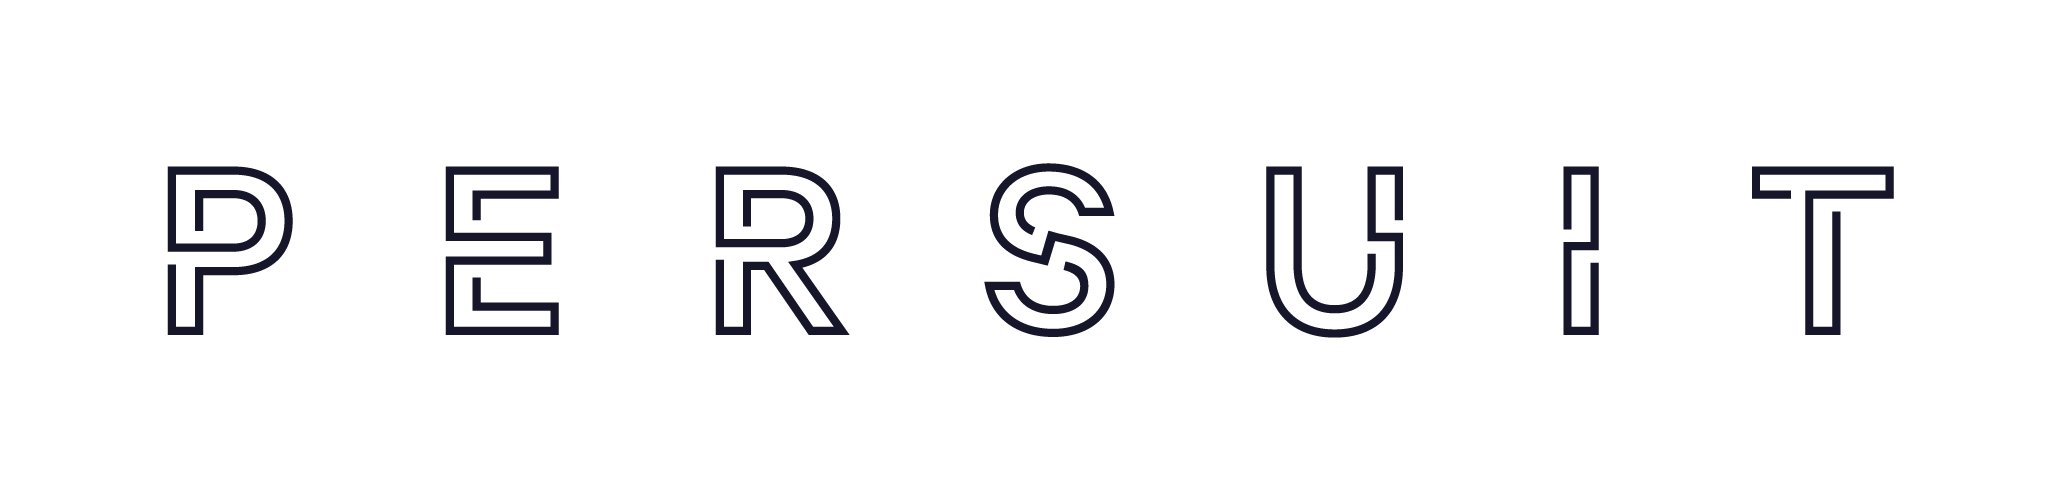 Persuit-logo-wht-bkg.jpg